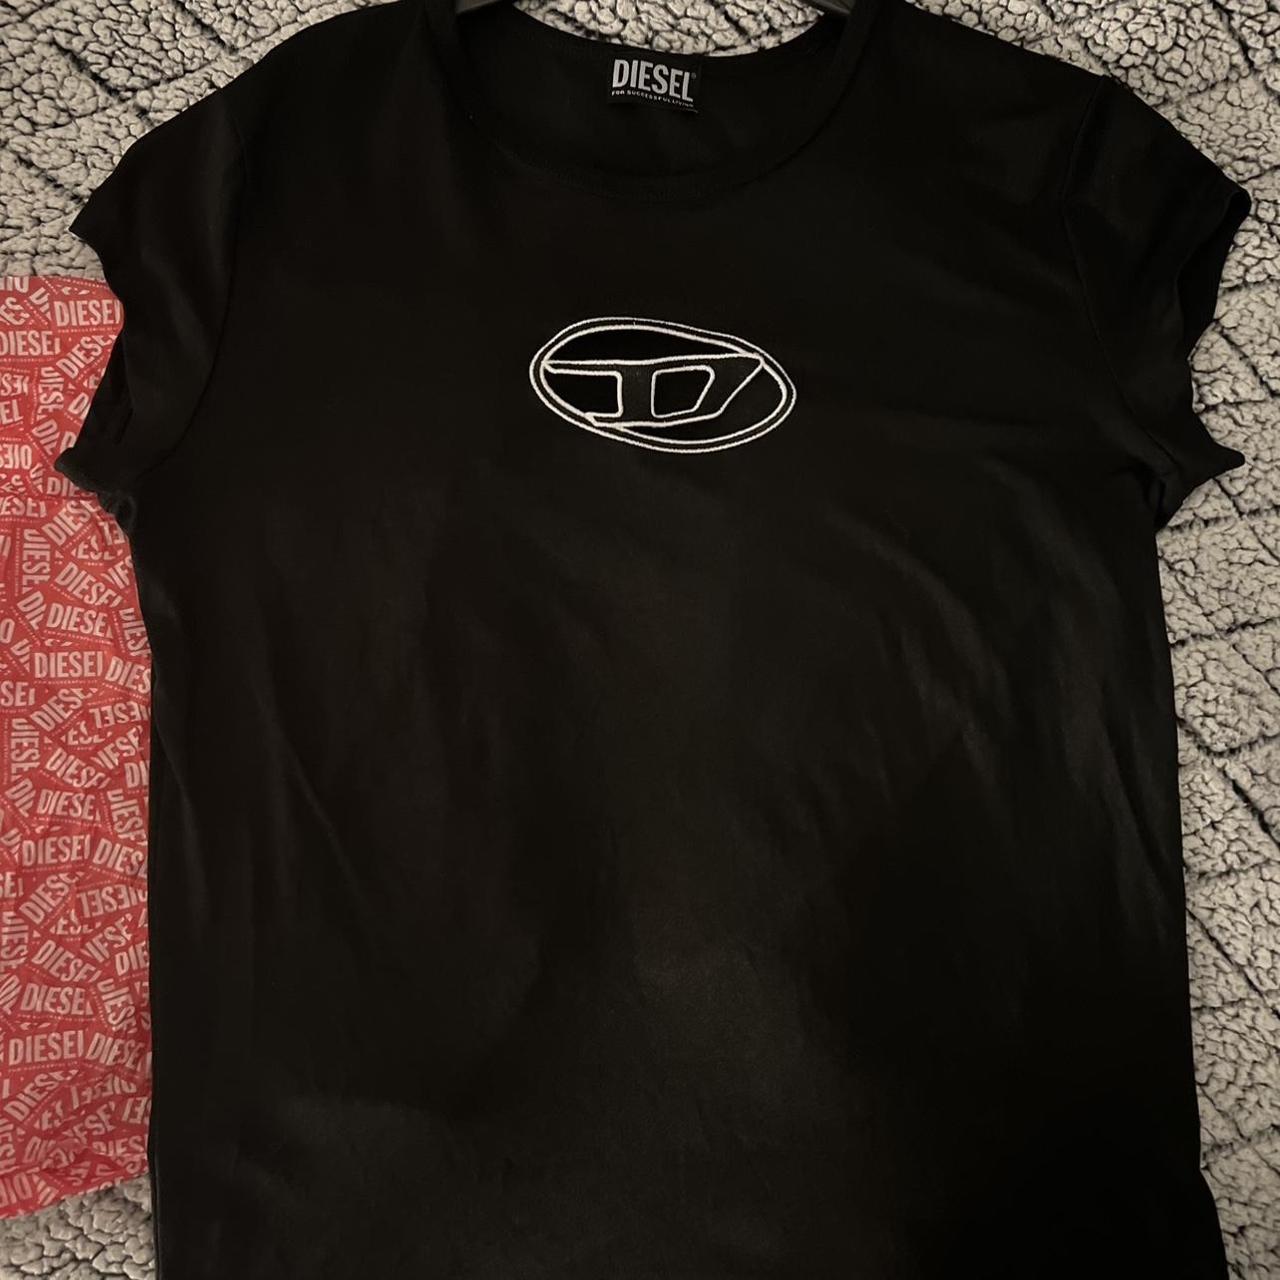 Diesel Women's Black T-shirt